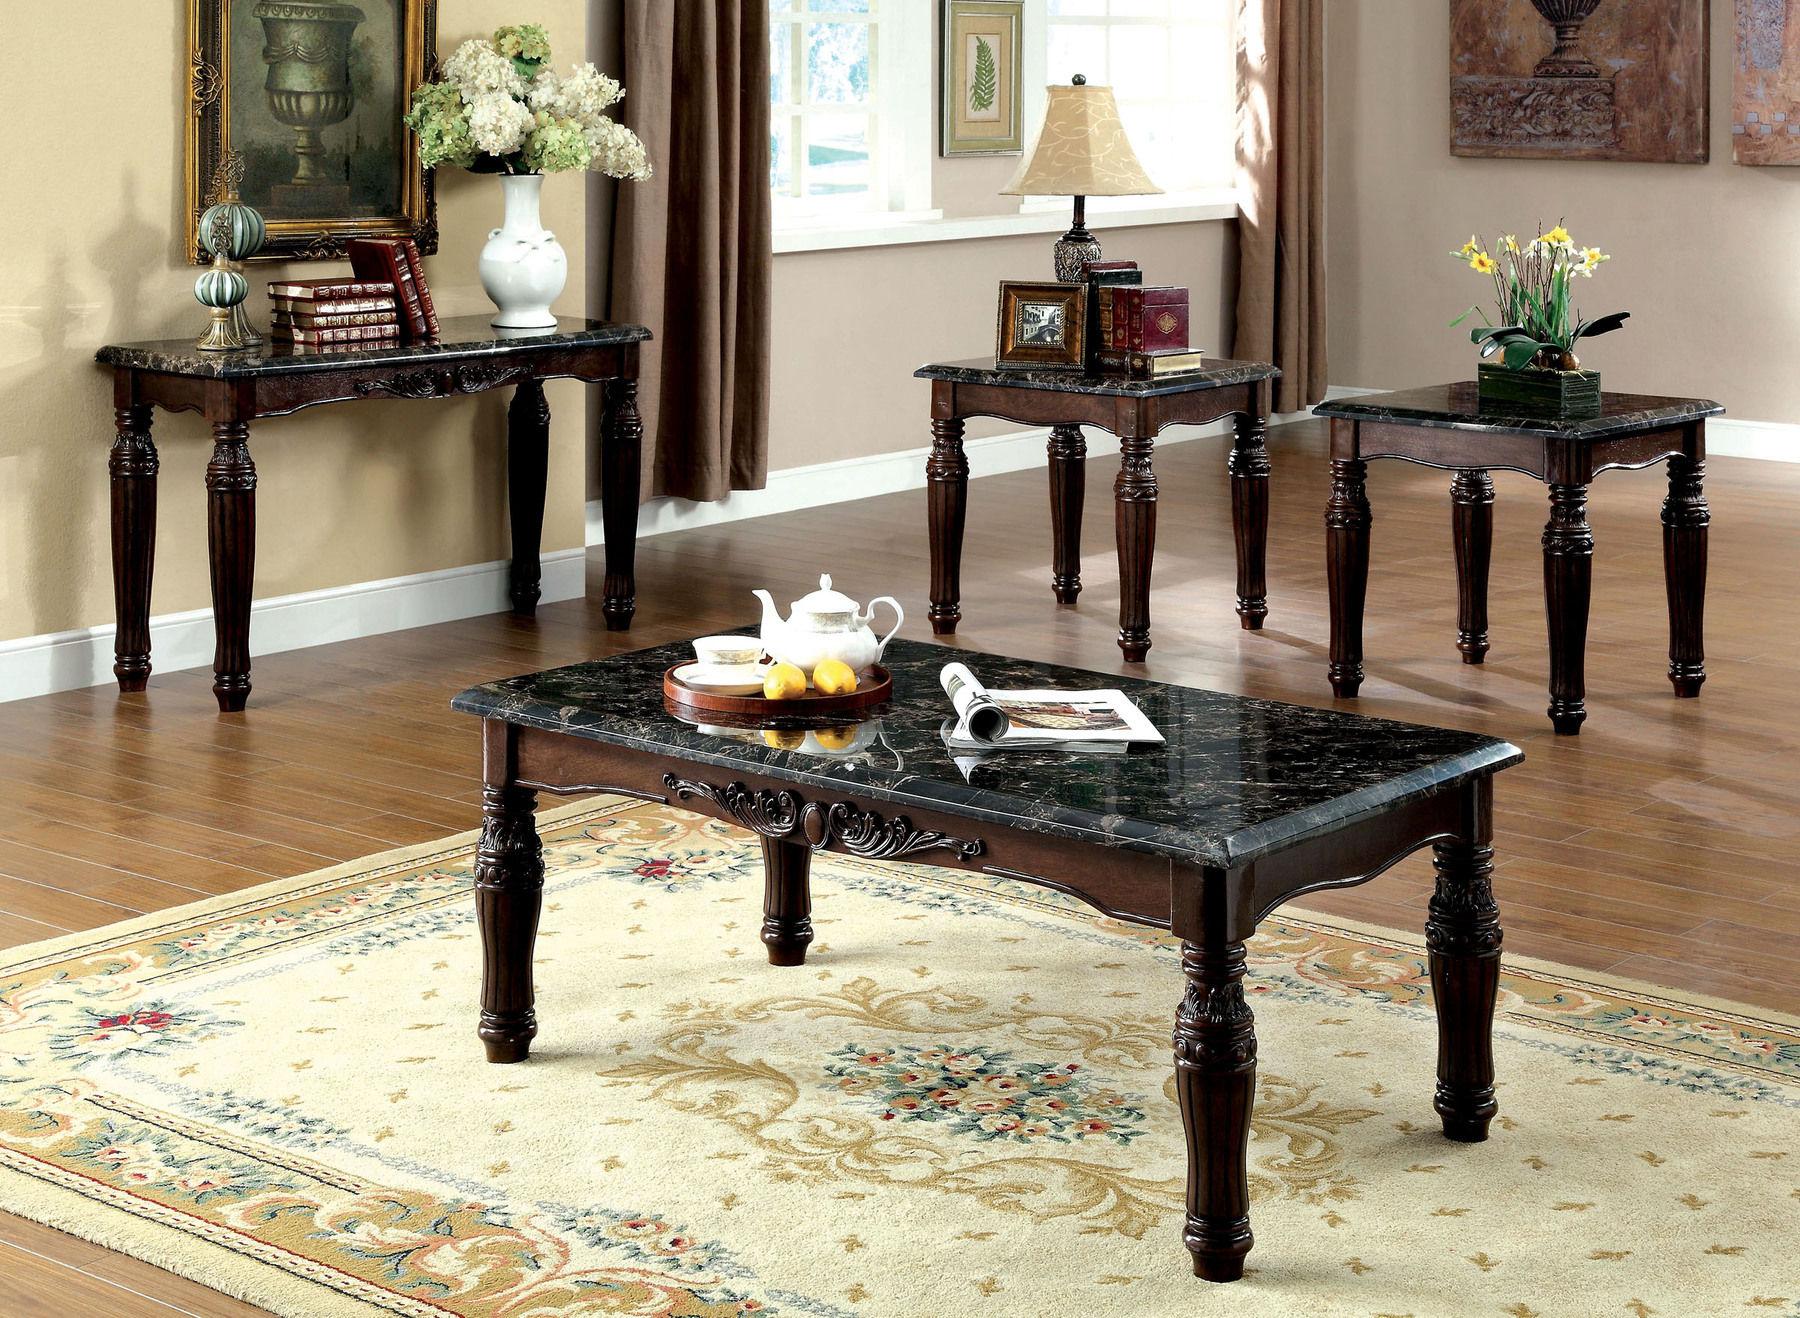 

    
Traditional Brown & Espresso Living Room Set 5pcs Furniture of America Elpis & Brampton
